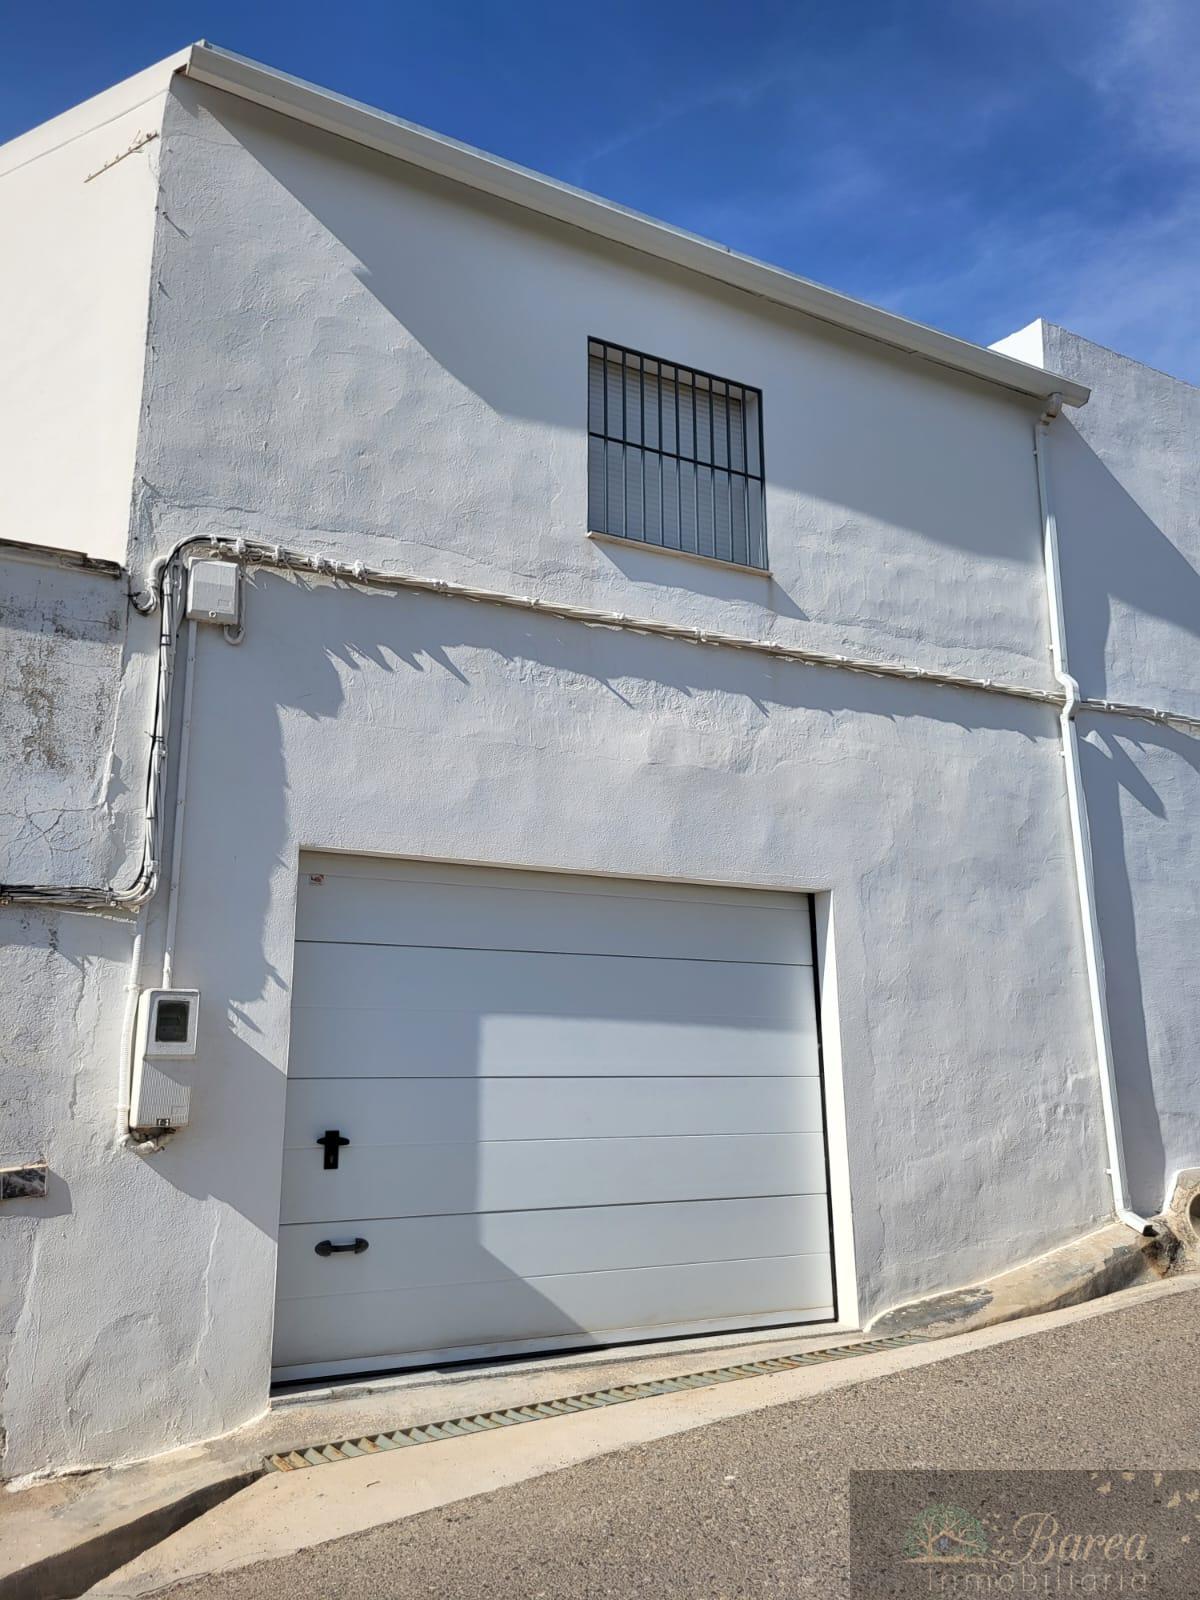 For sale of house in Aguilar de la Frontera